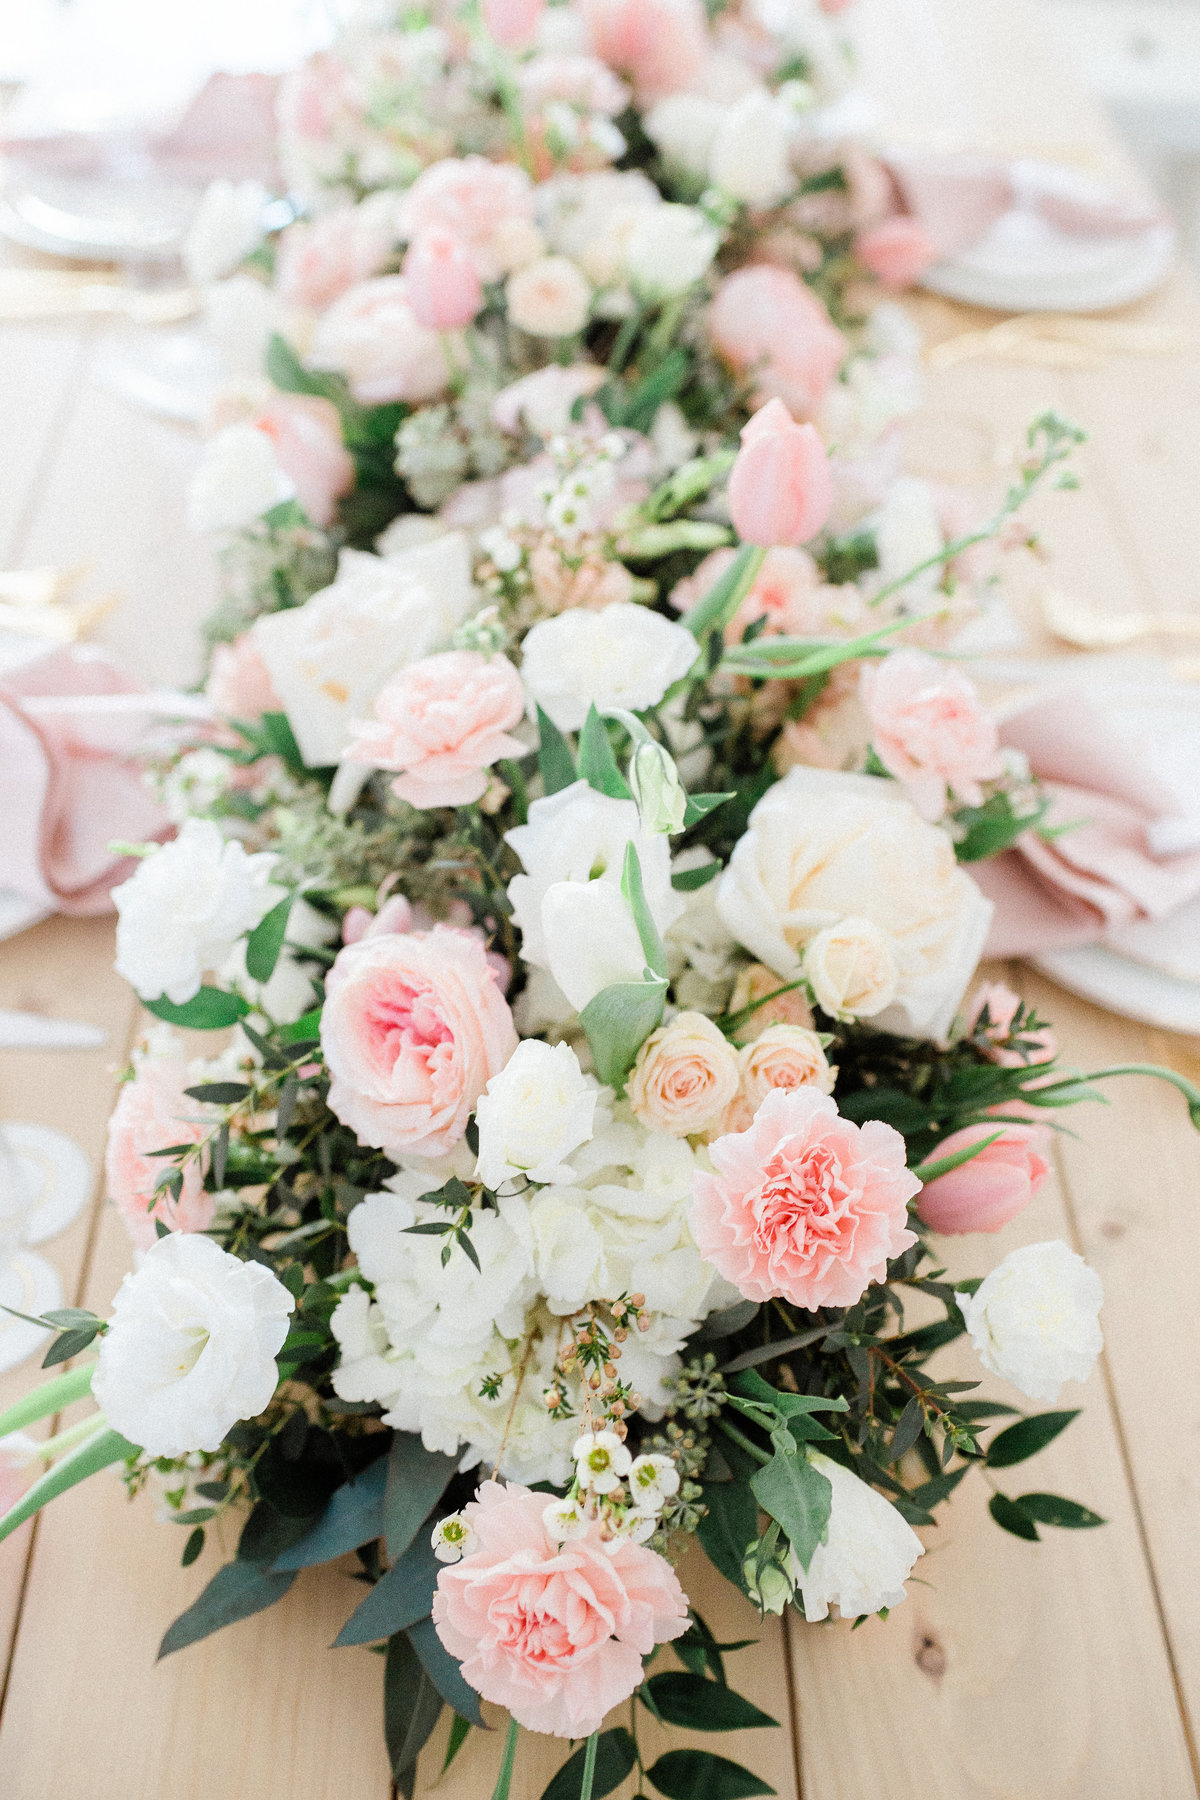 BKC4U WEDDING FLOWERS mixed pink white blush flower table garland